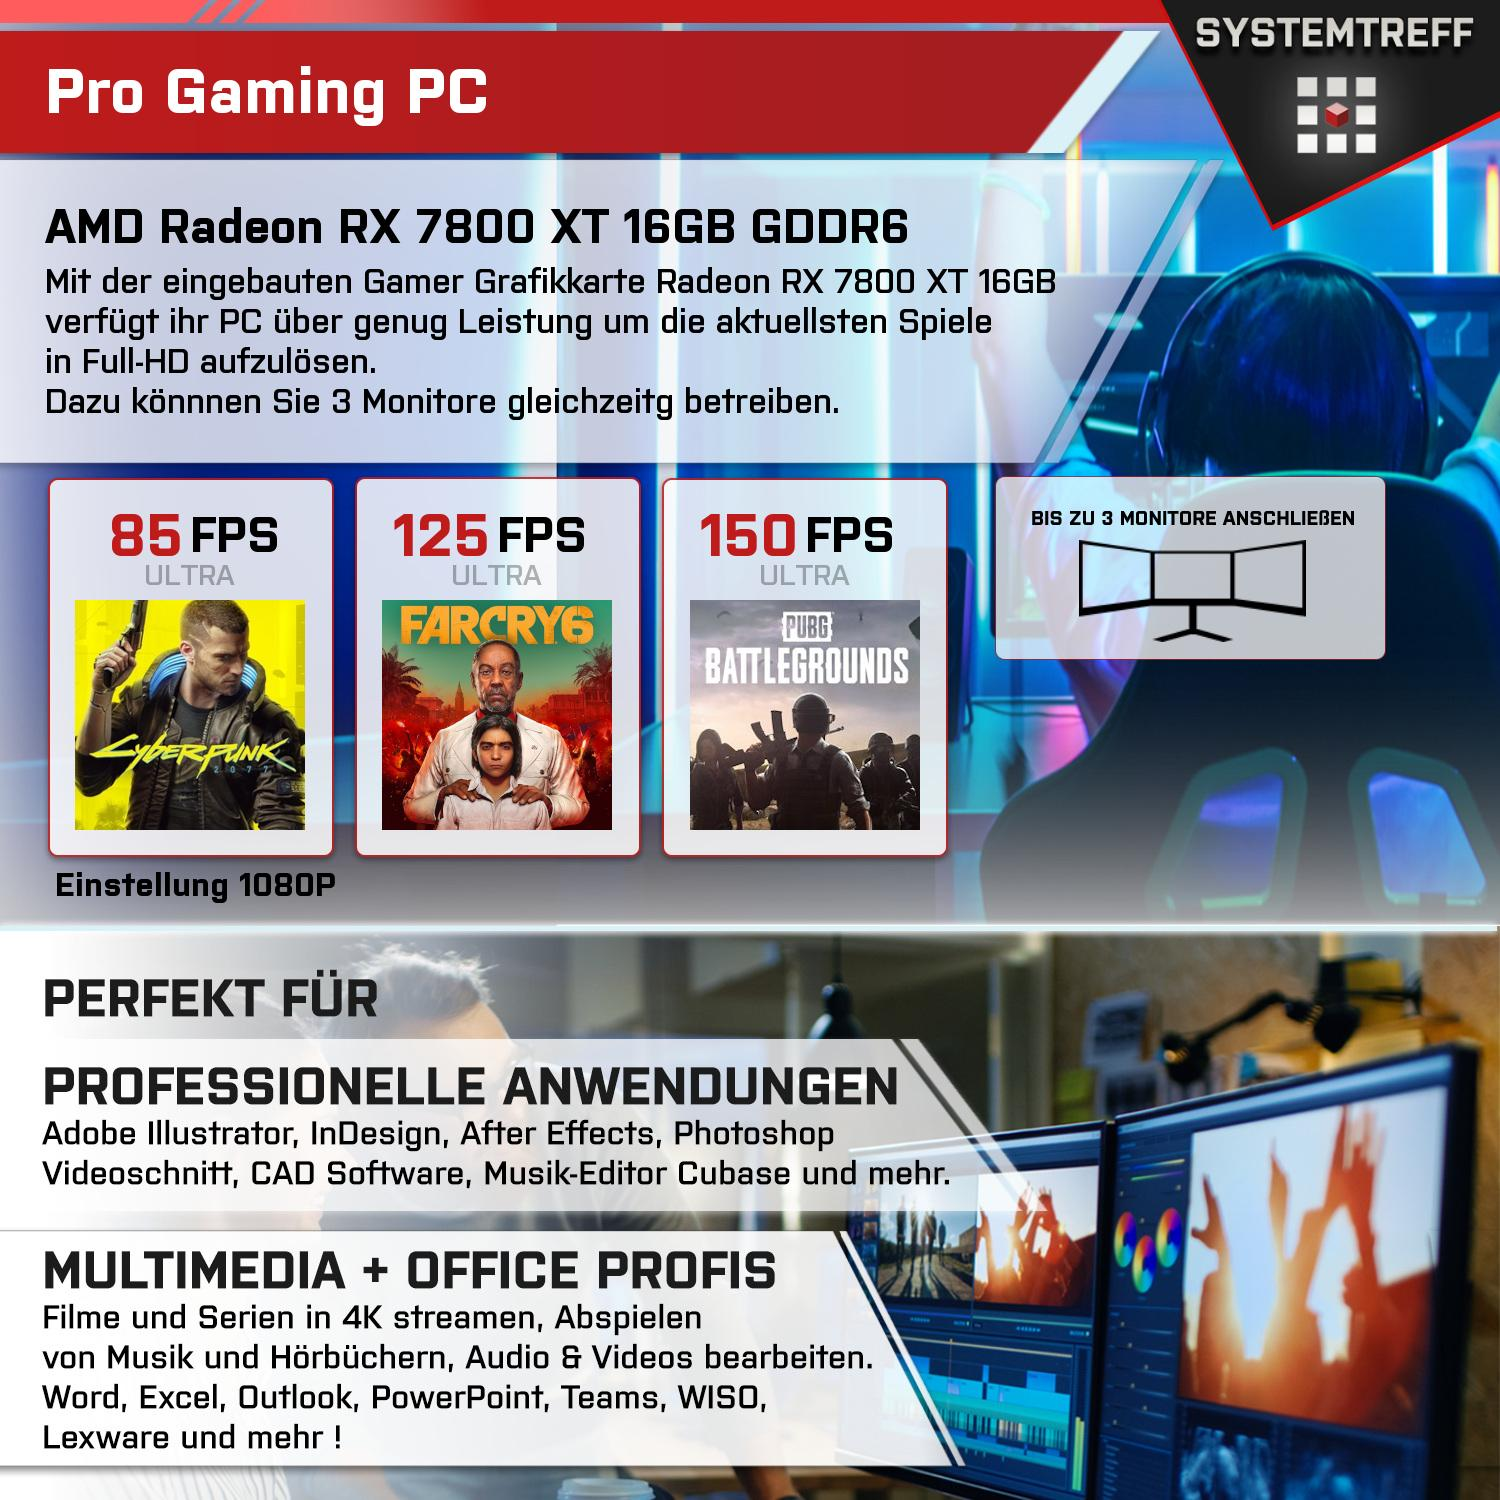 SYSTEMTREFF Gaming Komplett AMD 7700, RAM, Prozessor, 7700 Ryzen mSSD, GB 1000 16 7 GB PC 32 GB mit Komplett